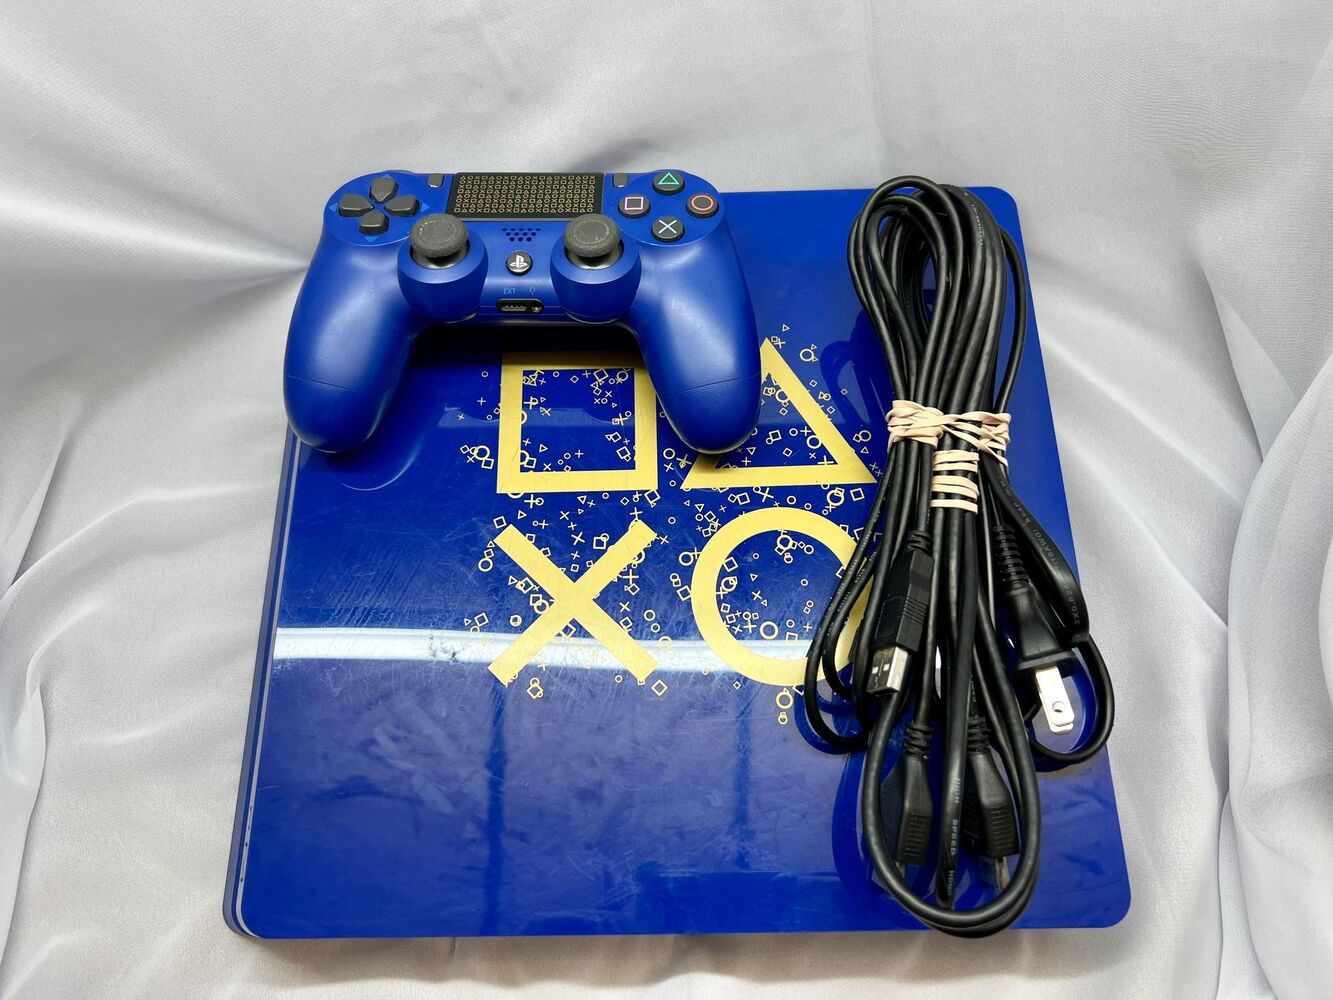 Sony PlayStation 4 1TB Slim Days of Play Limited Edition Blue, 3003131 